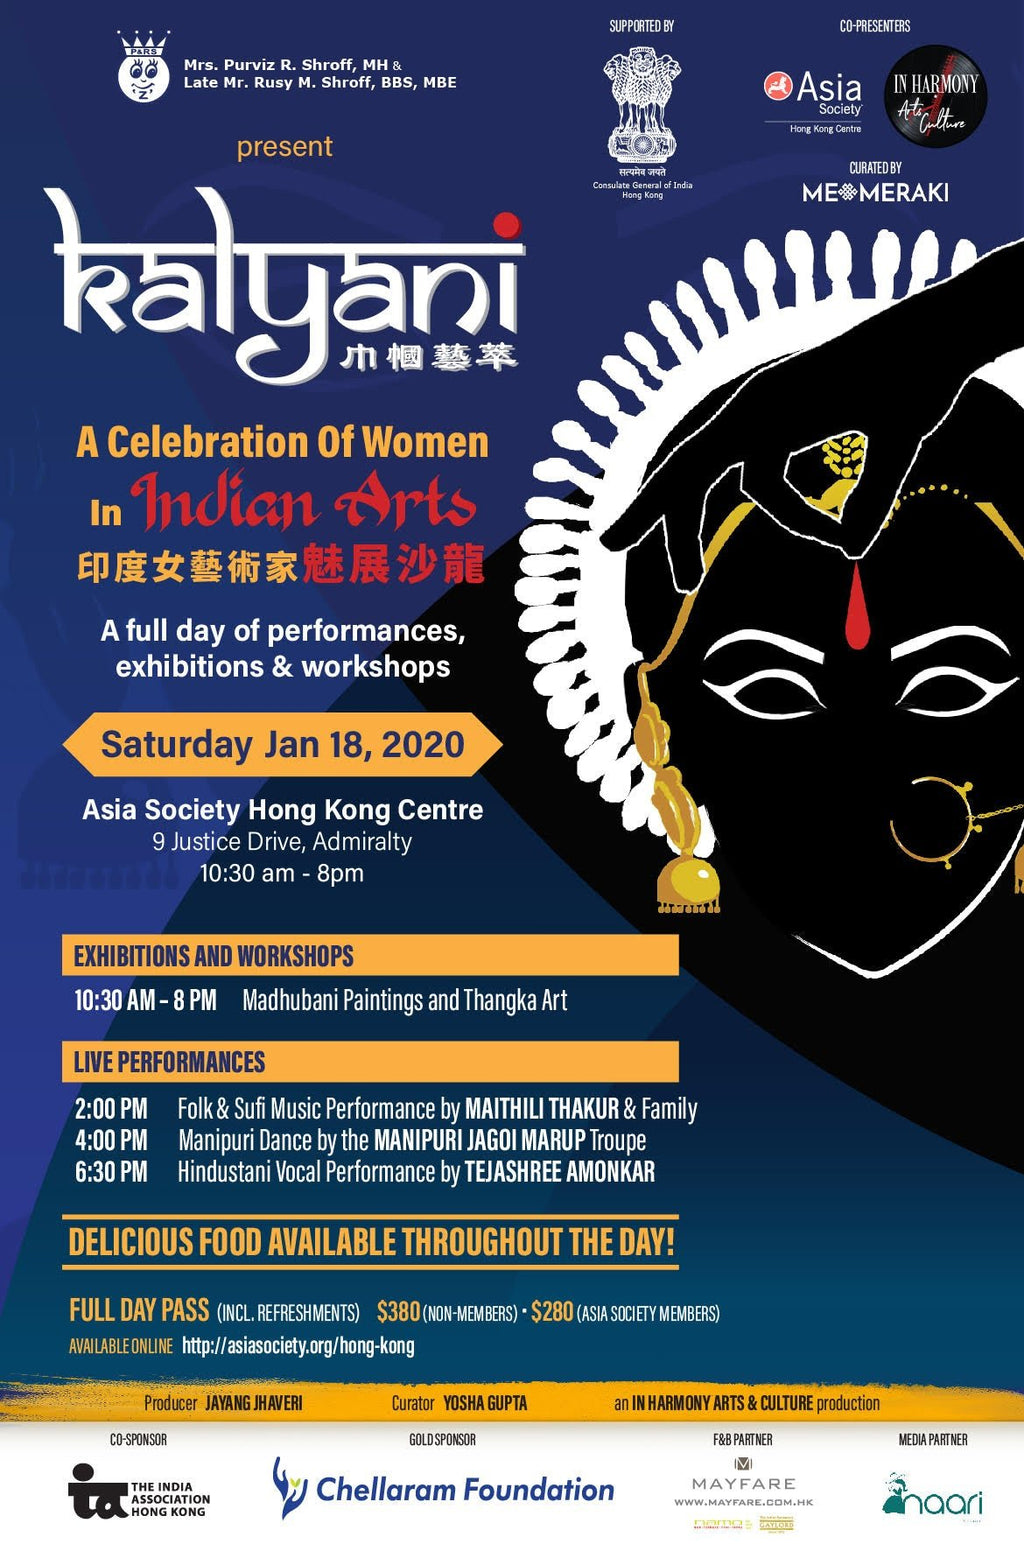 Kalyani: A Celebration of Women in Indian Arts - MeMeraki.com